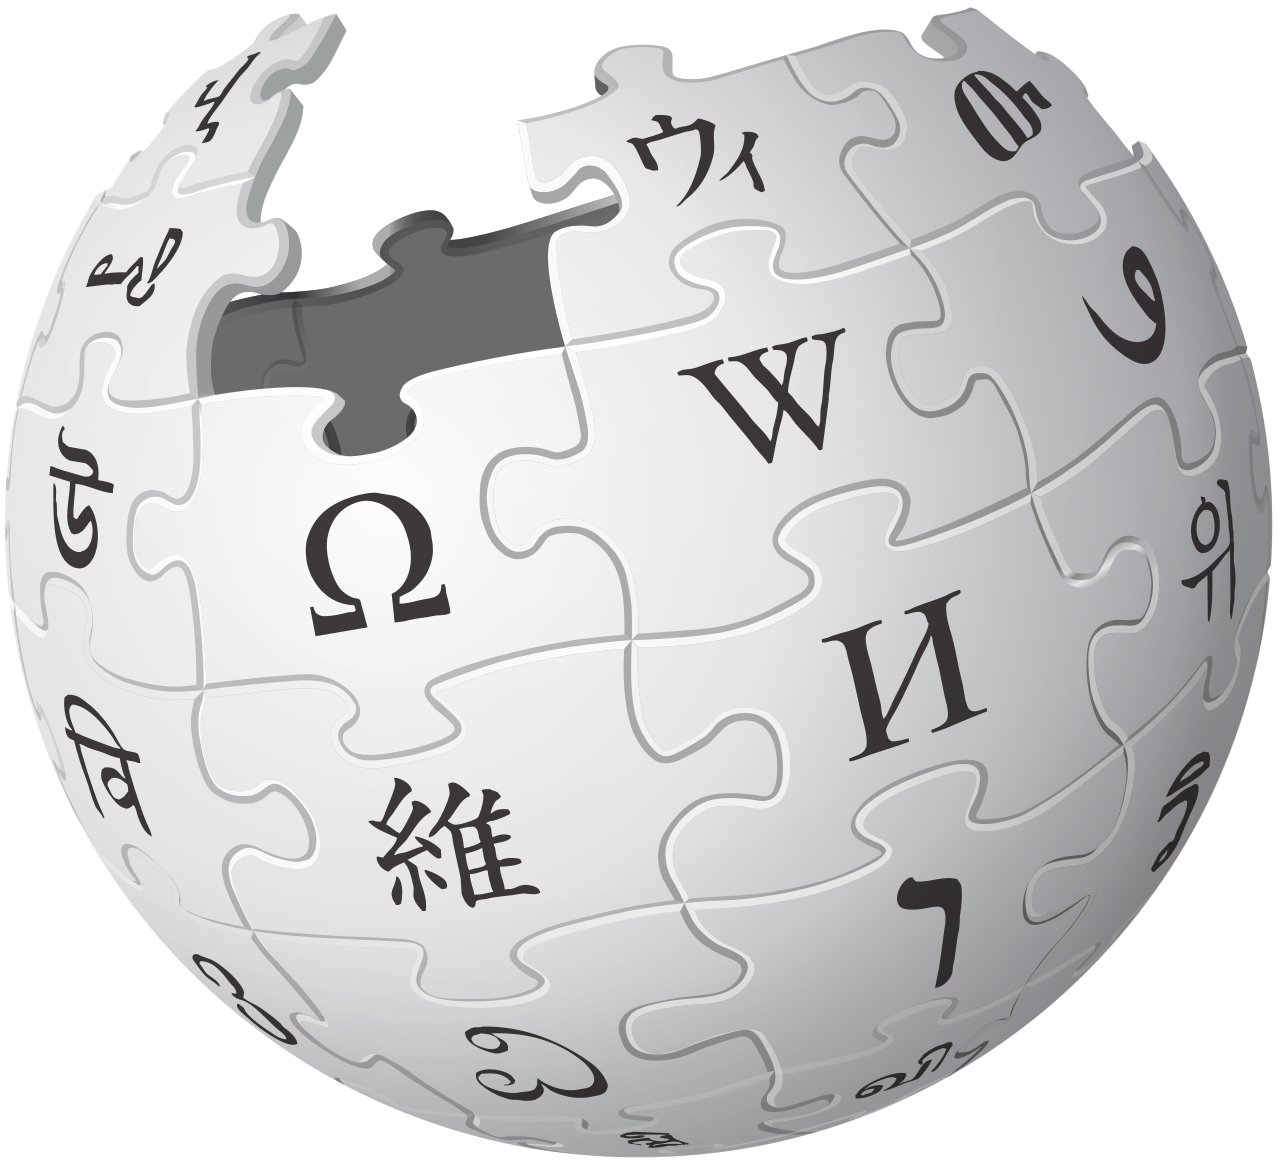 1280px-Wikipedia-logo-v2.png